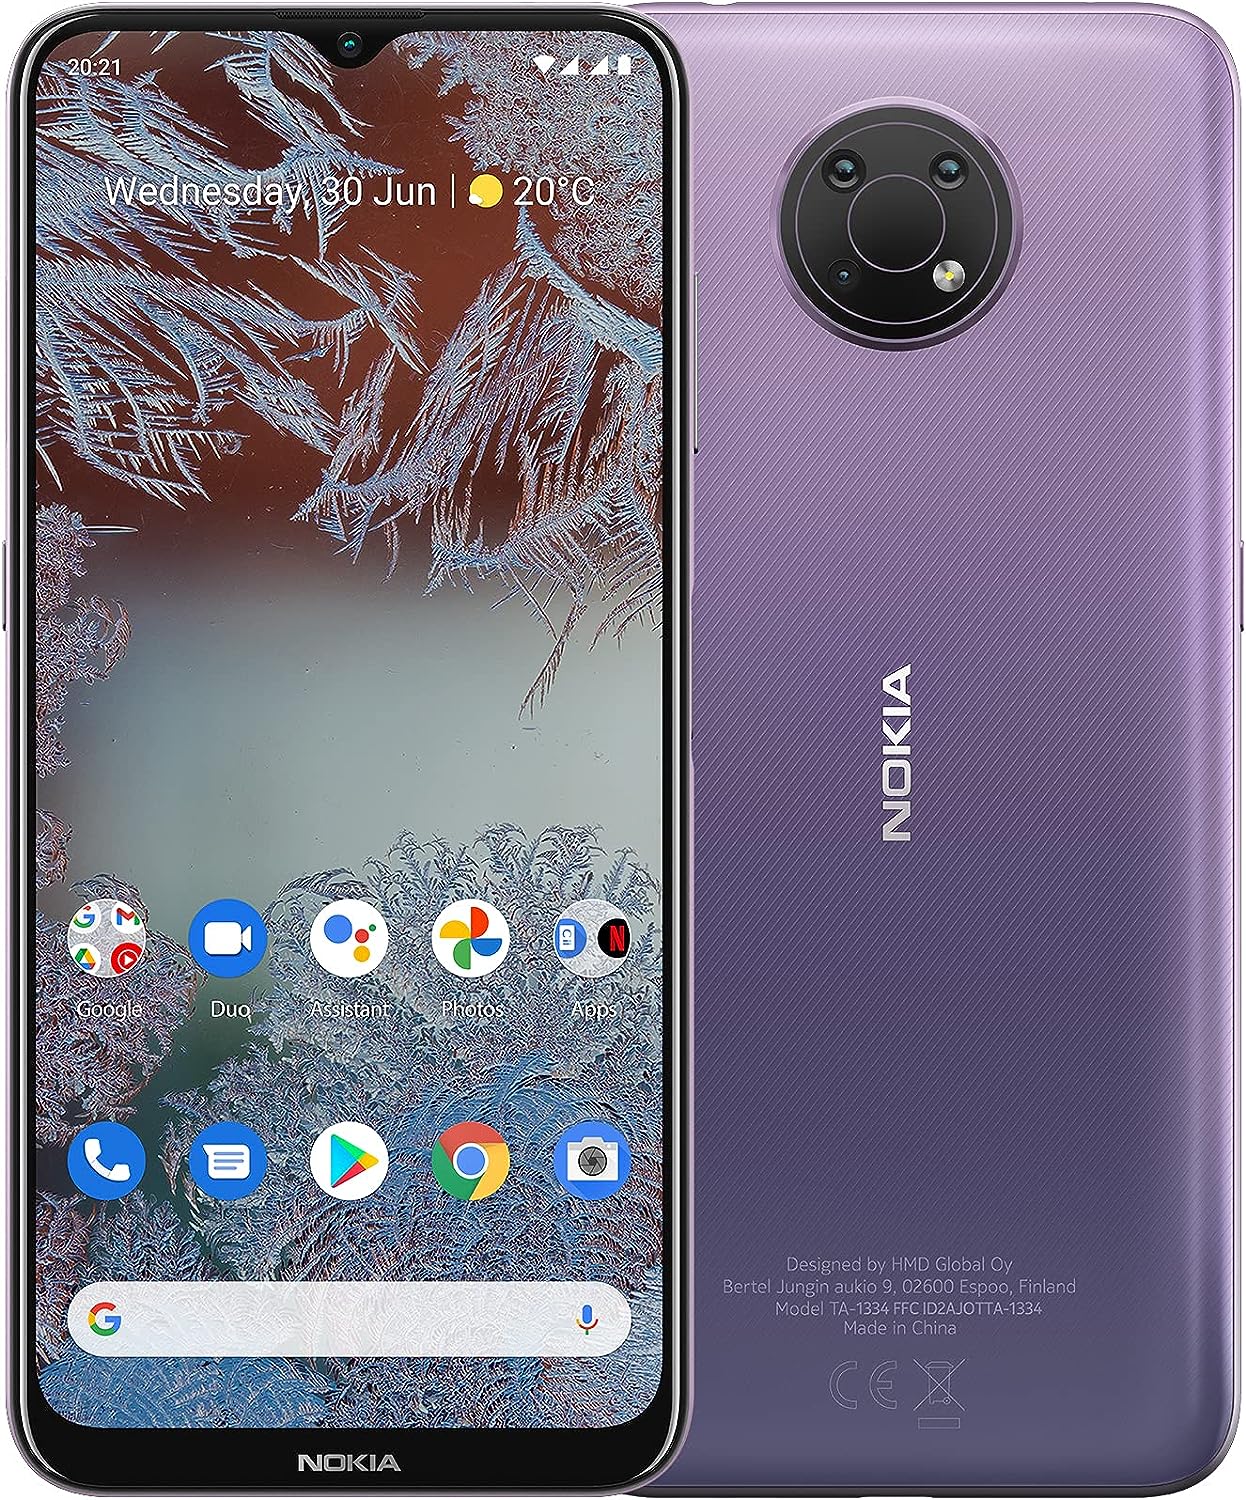 Nokia G10 Unlocked Smartphone Review